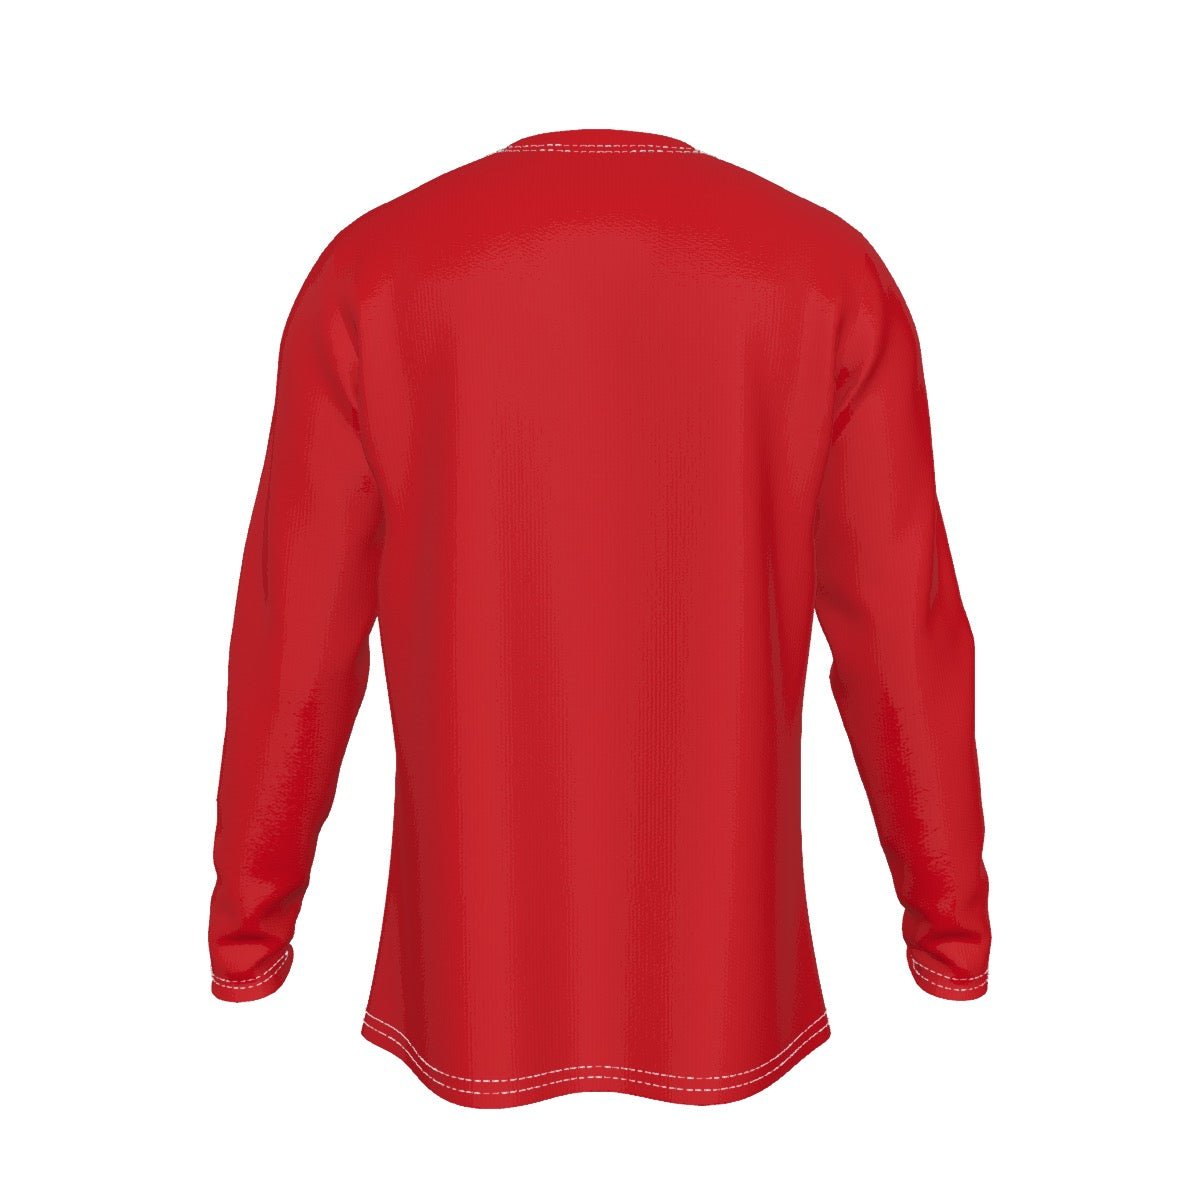 Men's Long Sleeve Christmas T-Shirt - Merry Christmas - Red - Festive Style